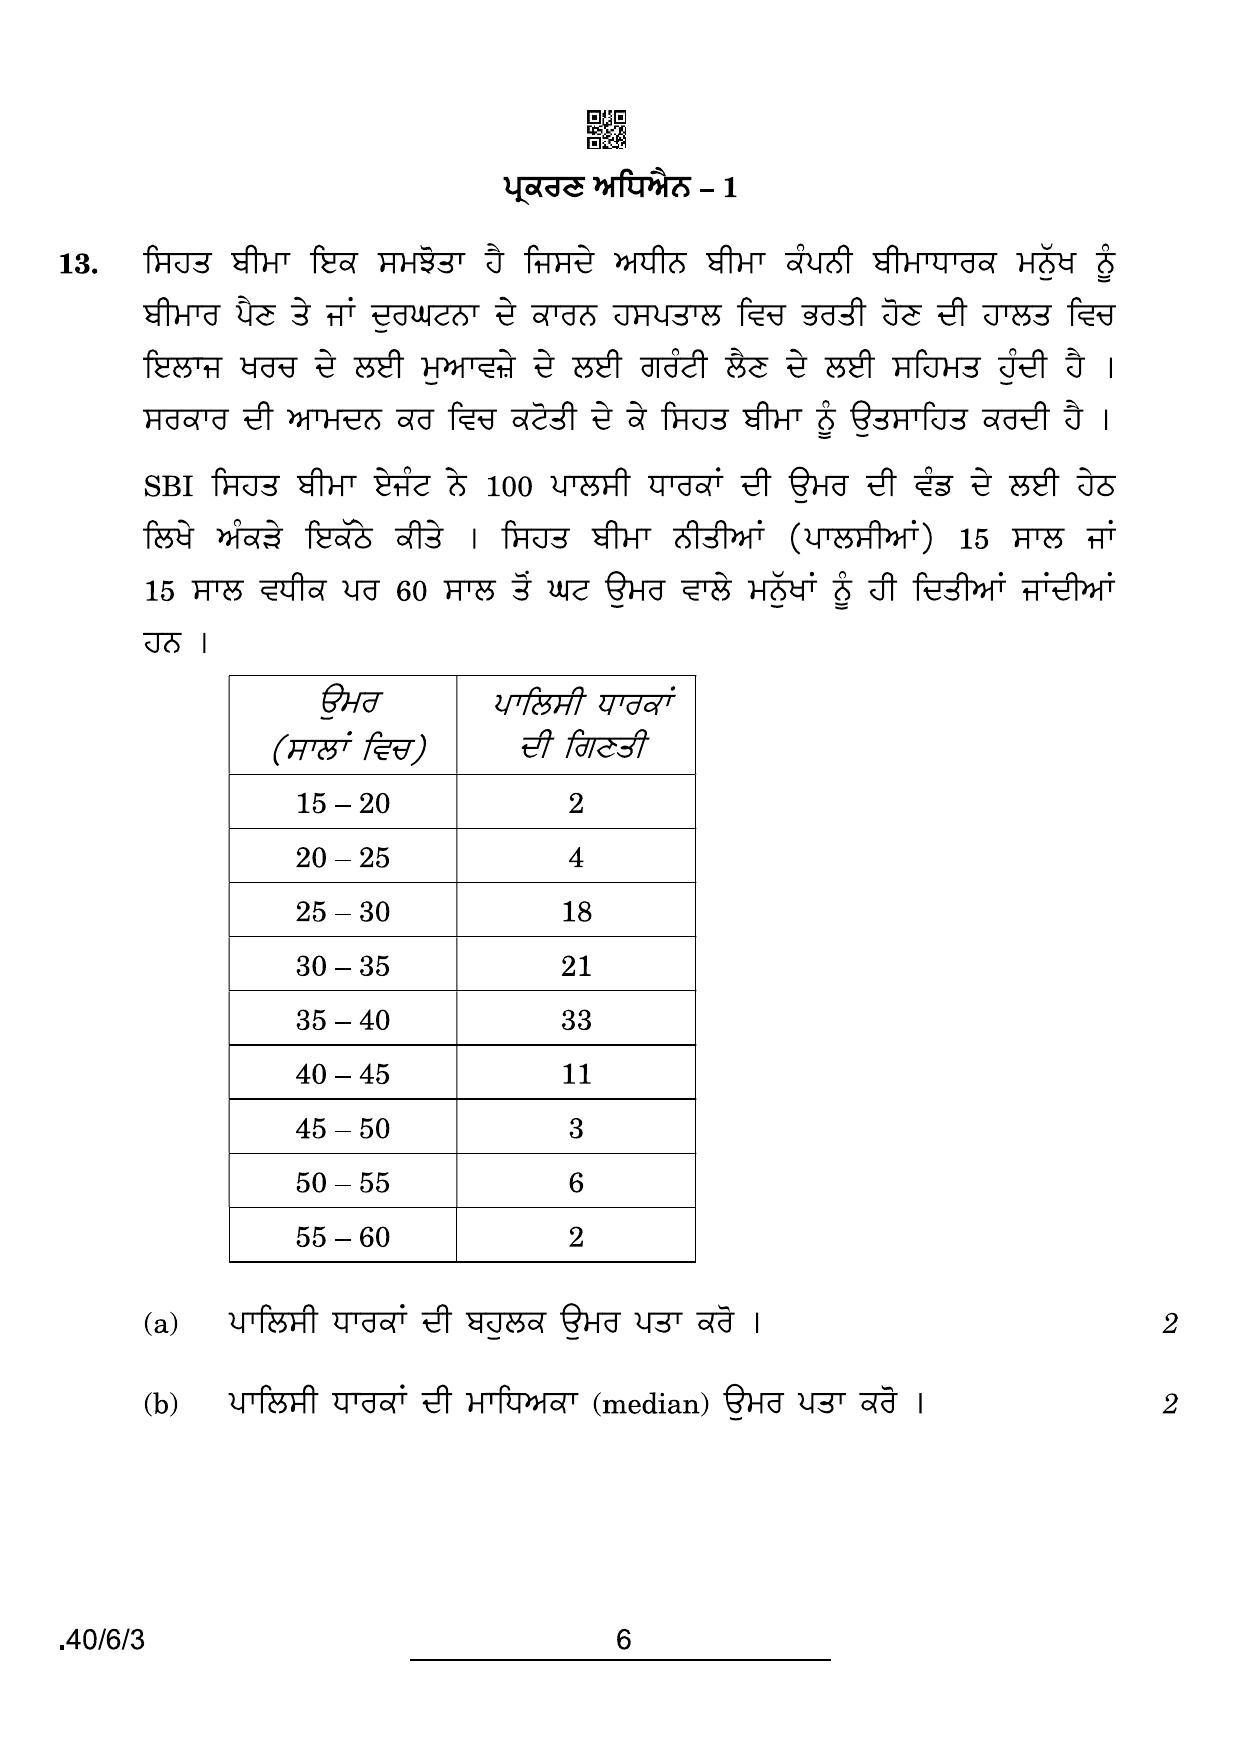 CBSE Class 10 40-6-3 Maths Std Punjabi 2022 Compartment Question Paper - Page 6